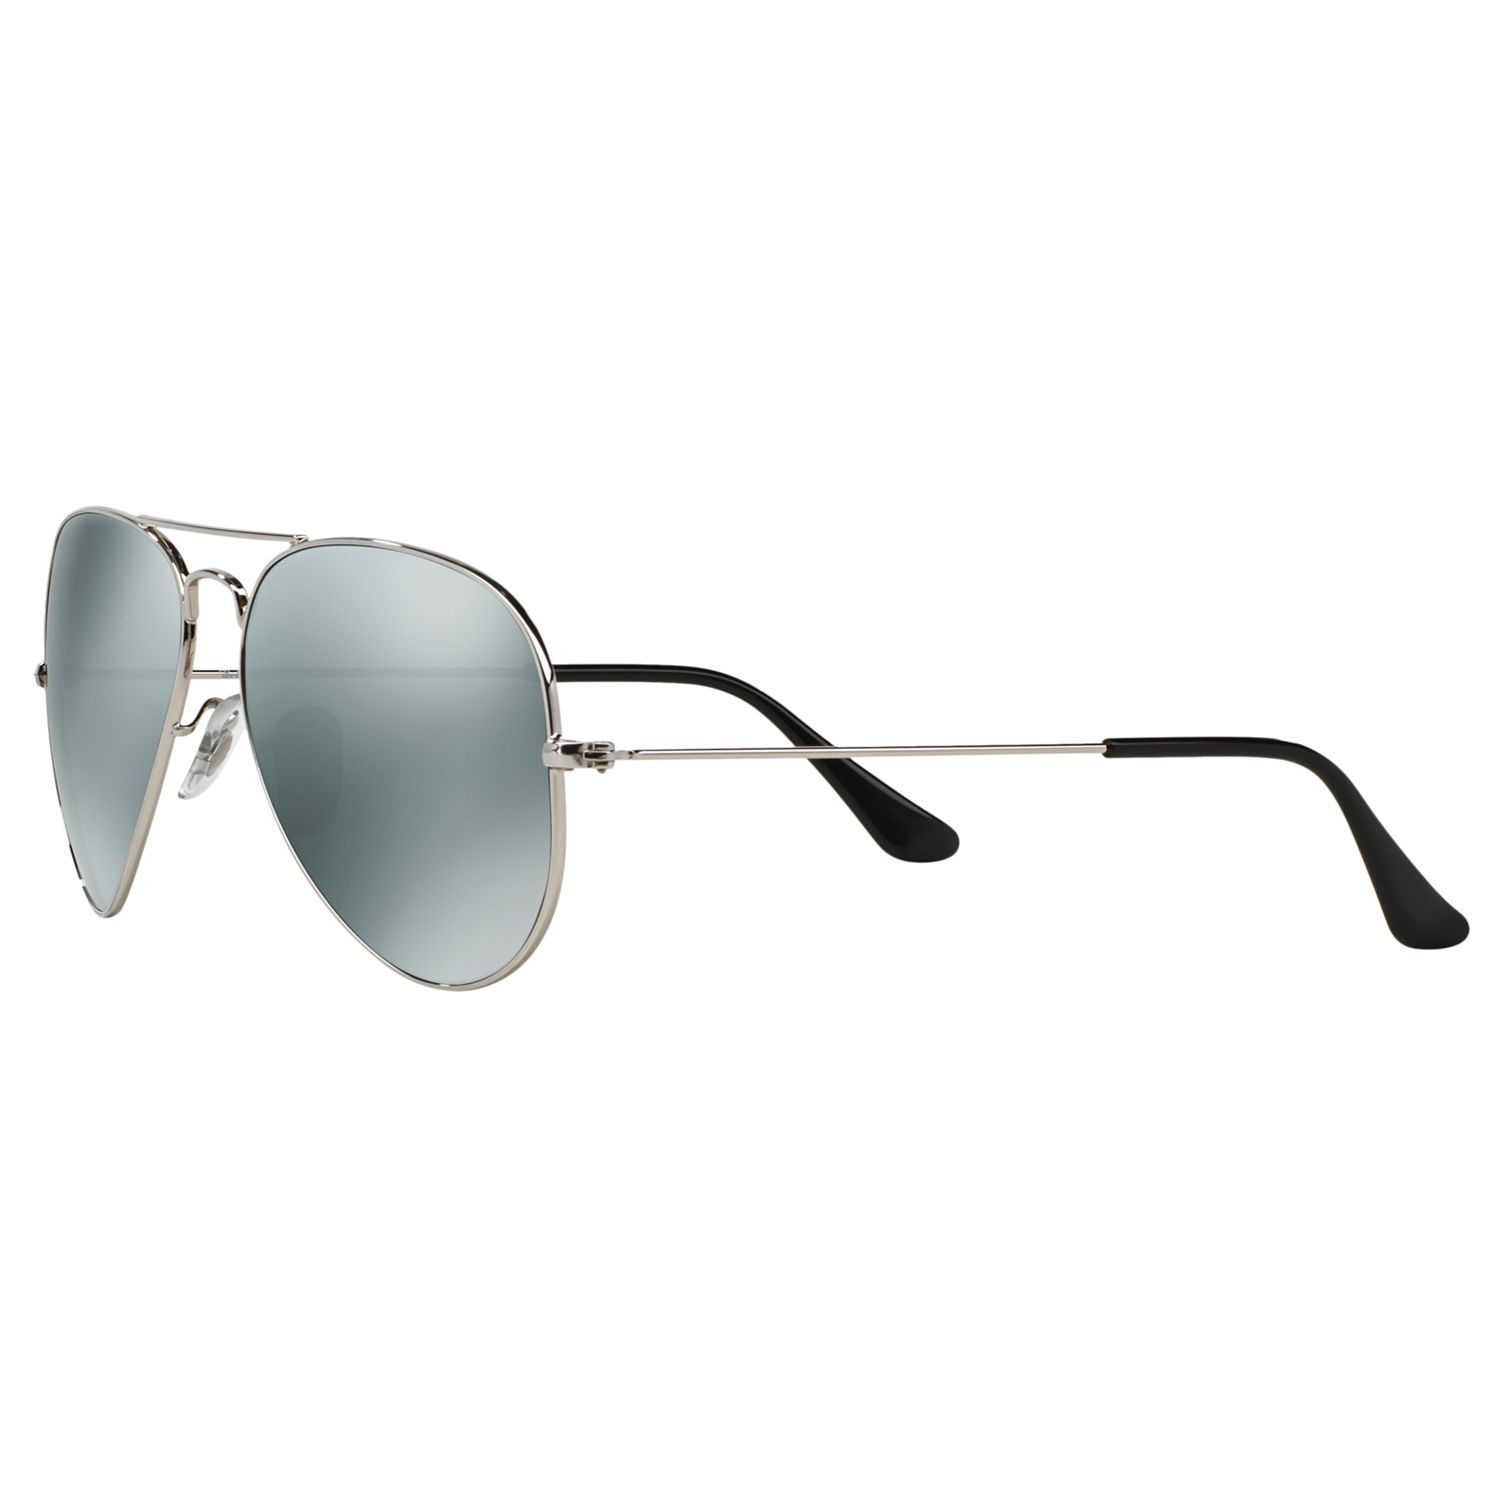 Ray-Ban RB3025 Iconic Aviator Sunglasses, Silver/Mirror Grey at John Lewis  u0026 Partners